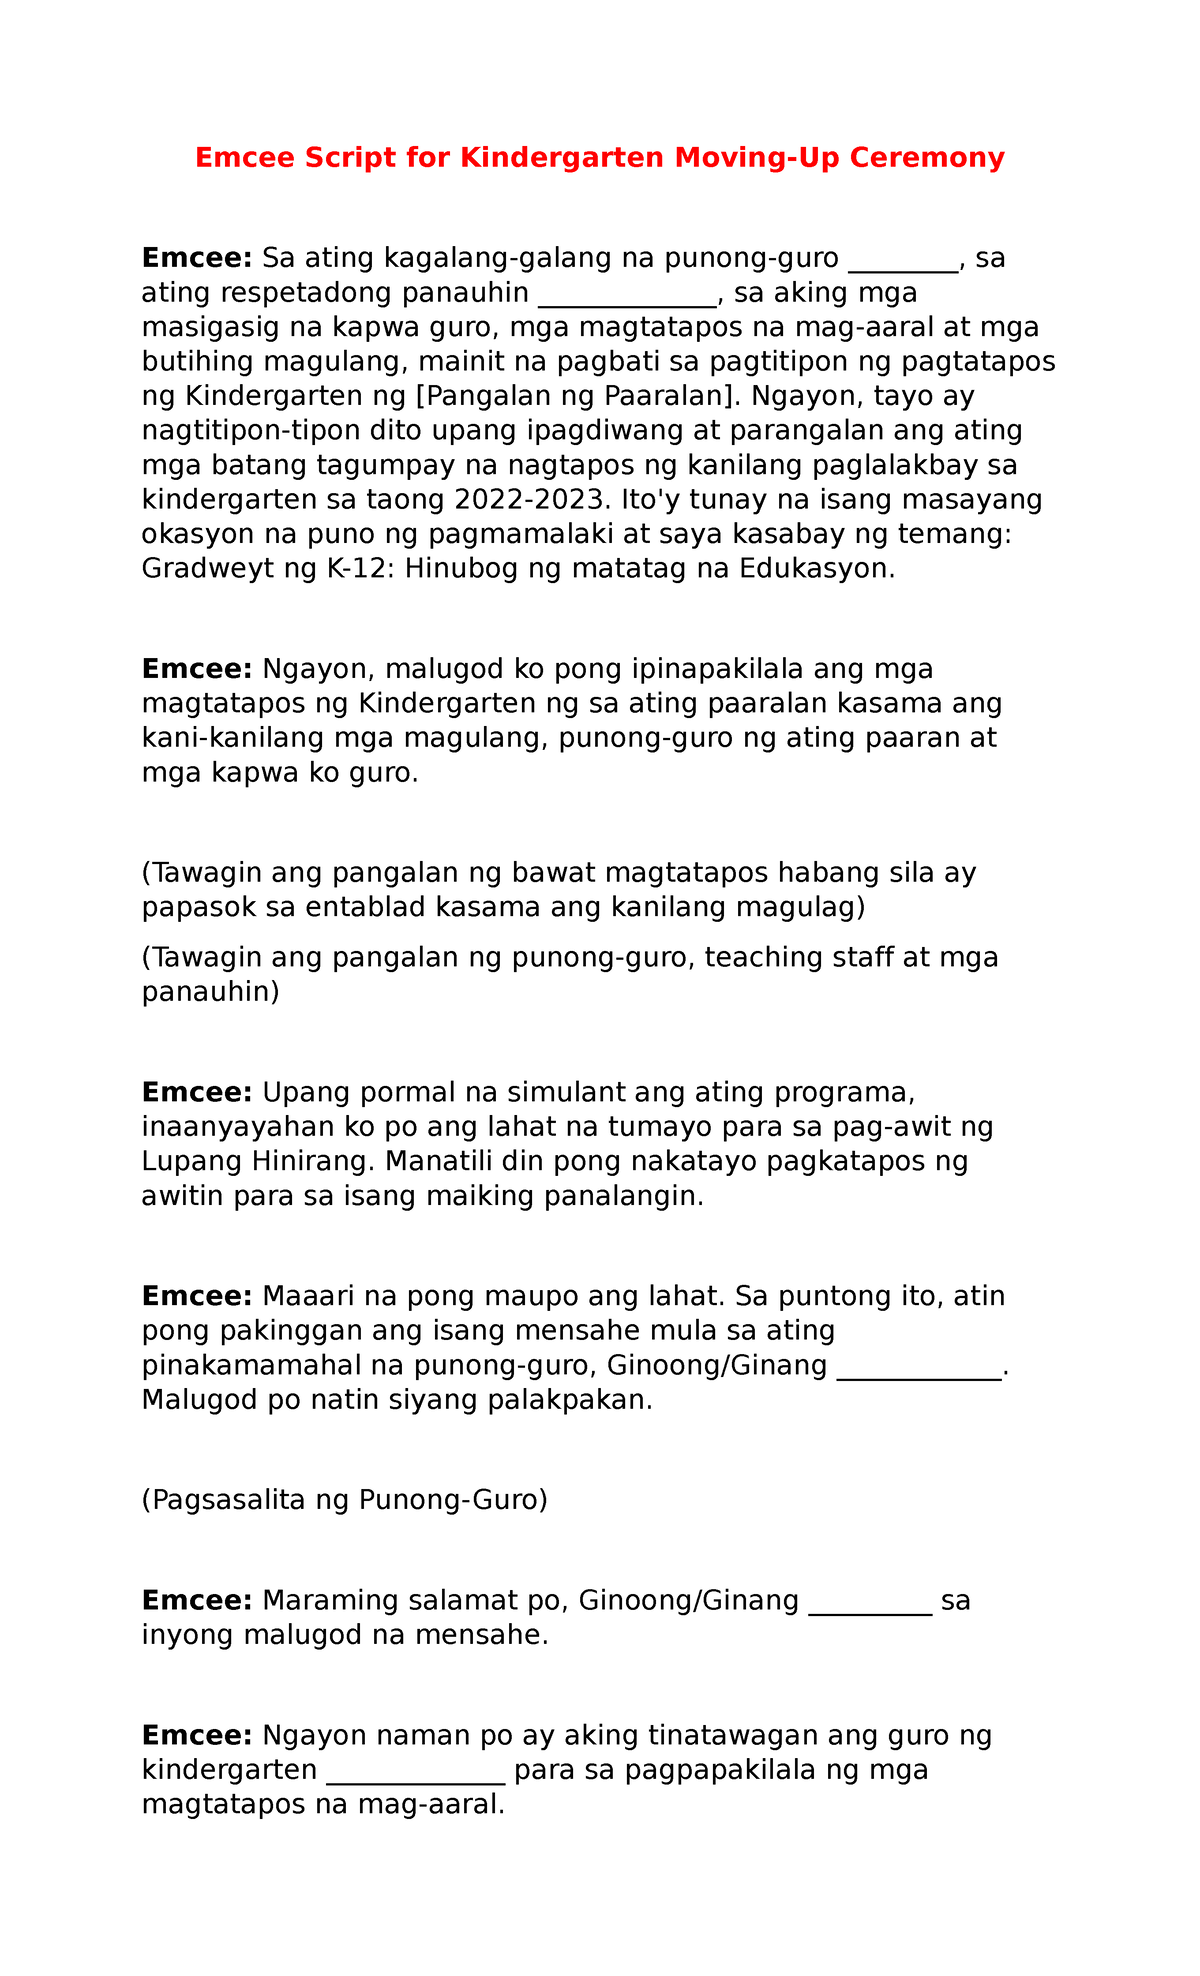 sample speech for kindergarten moving up ceremony tagalog